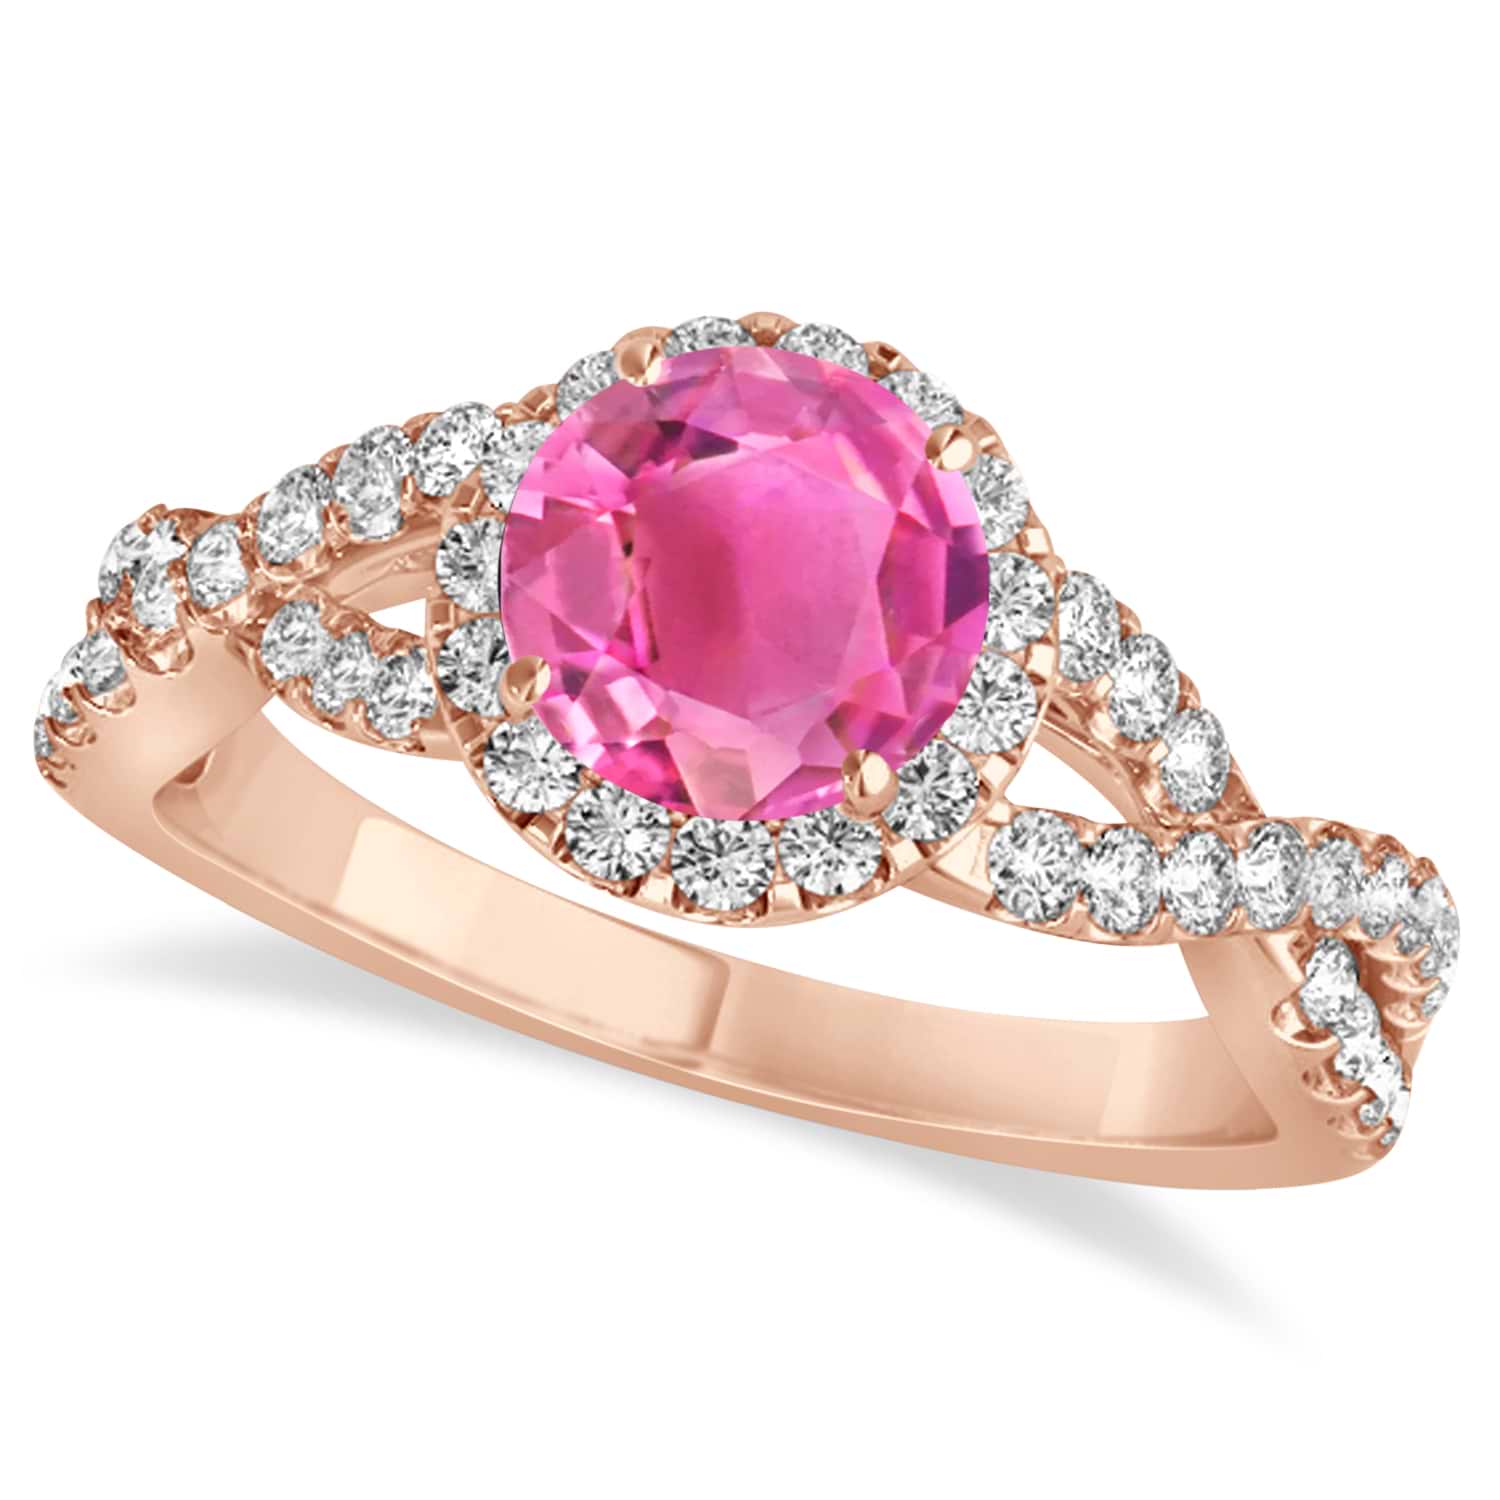 Pink Tourmaline & Diamond Twisted Engagement Ring 18k Rose Gold 1.25ct